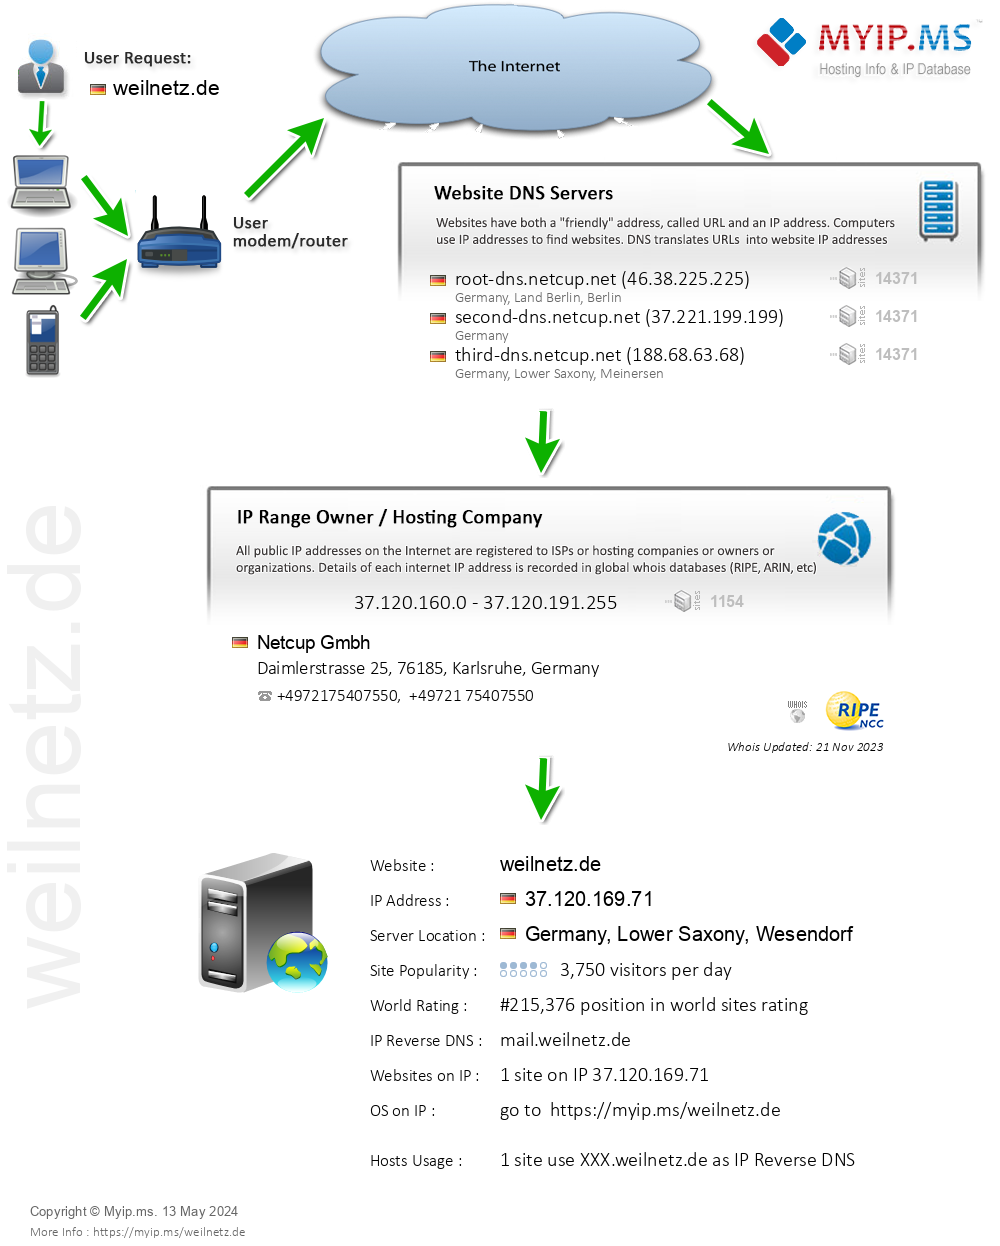 Weilnetz.de - Website Hosting Visual IP Diagram